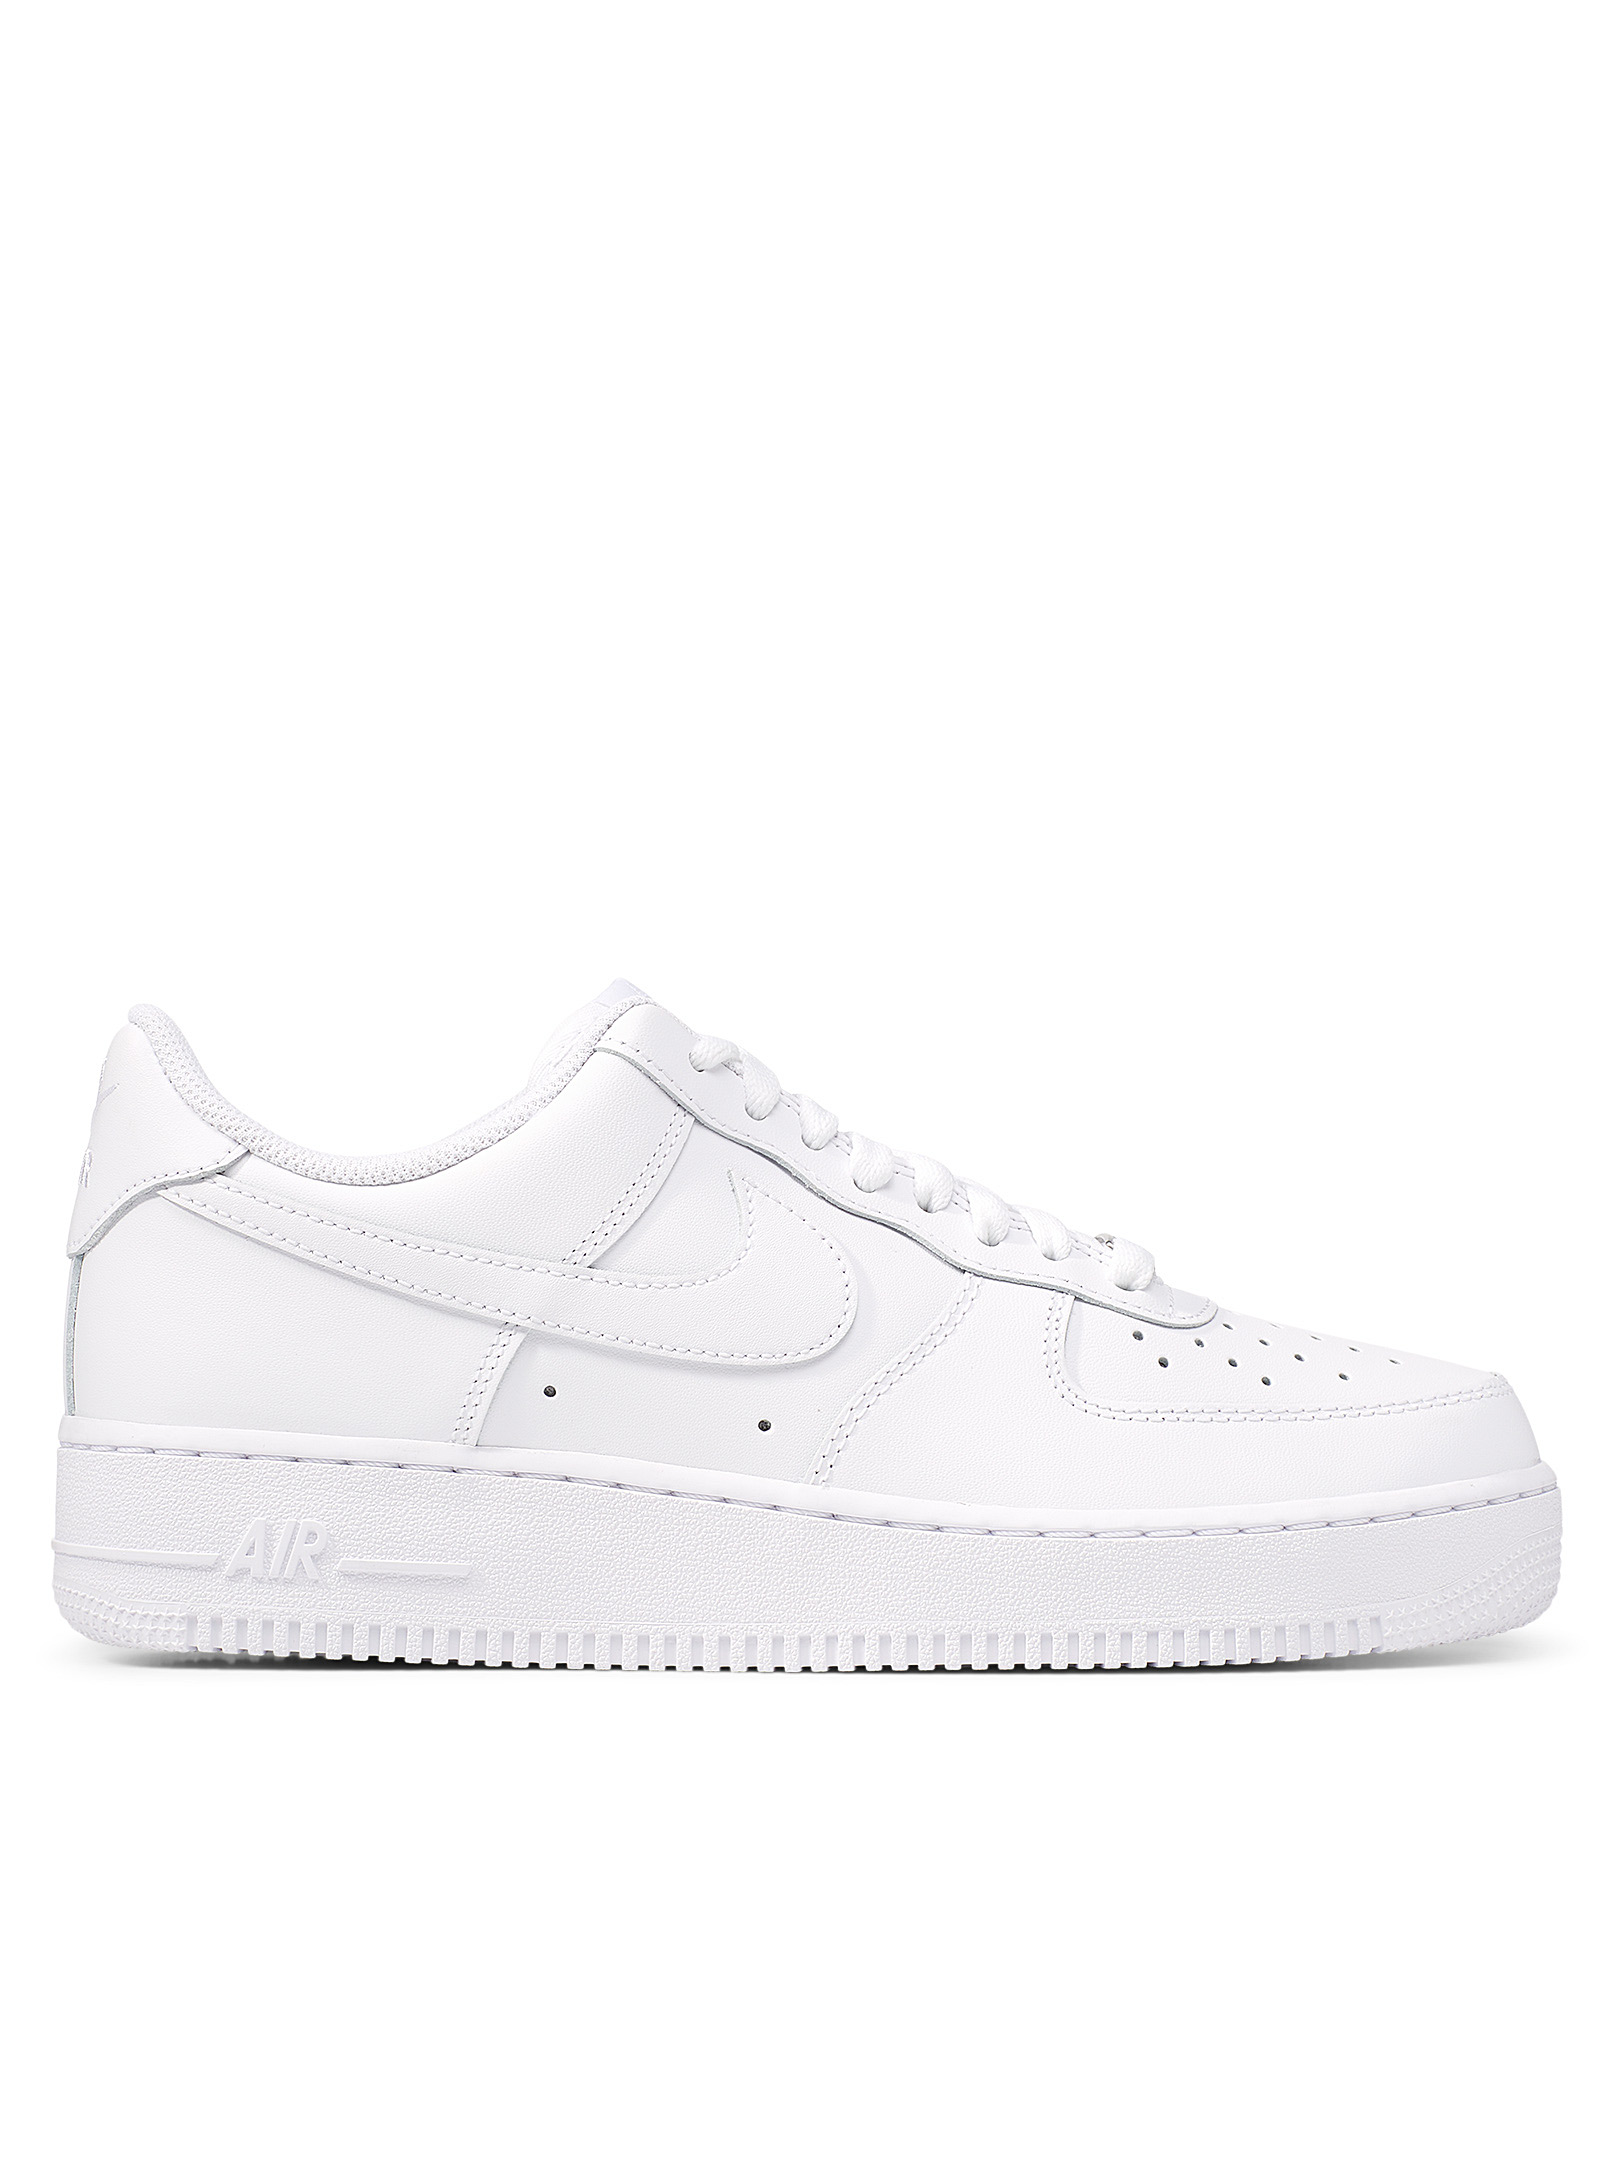 Nike Air Force 1 '07 Sneakers Men In White